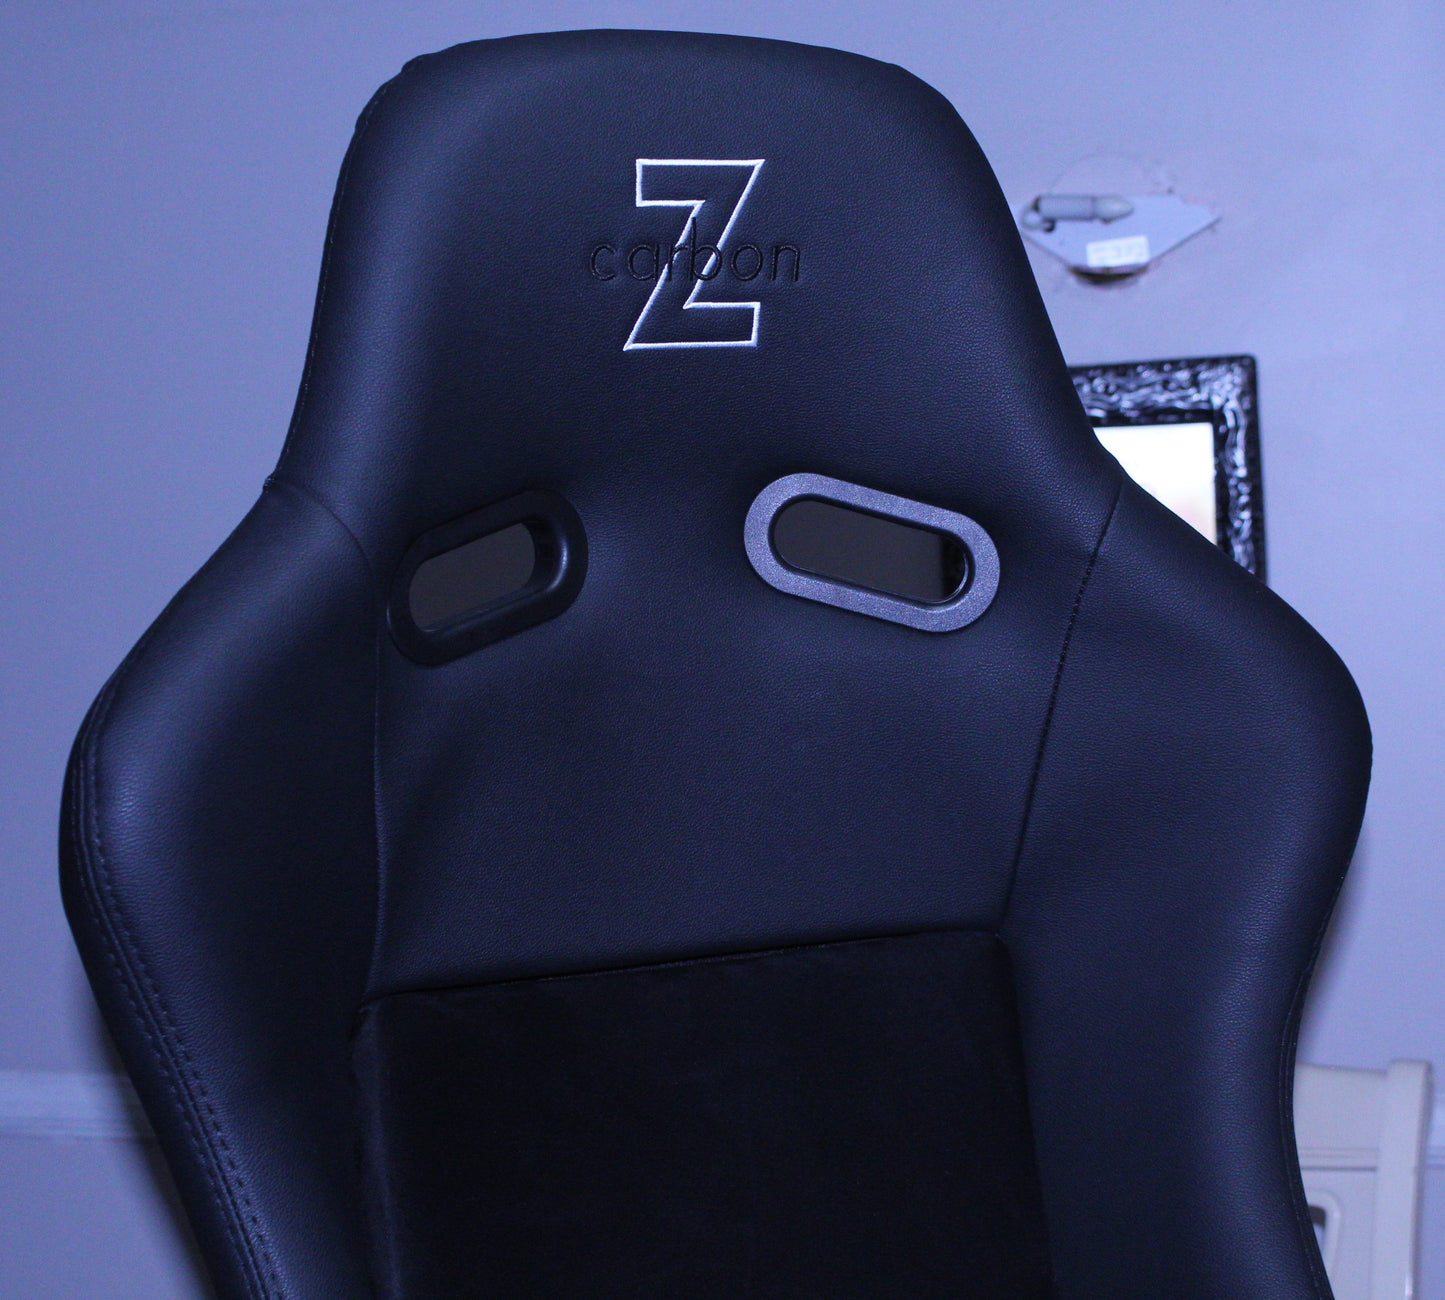 Carbon Z Bucket Seat